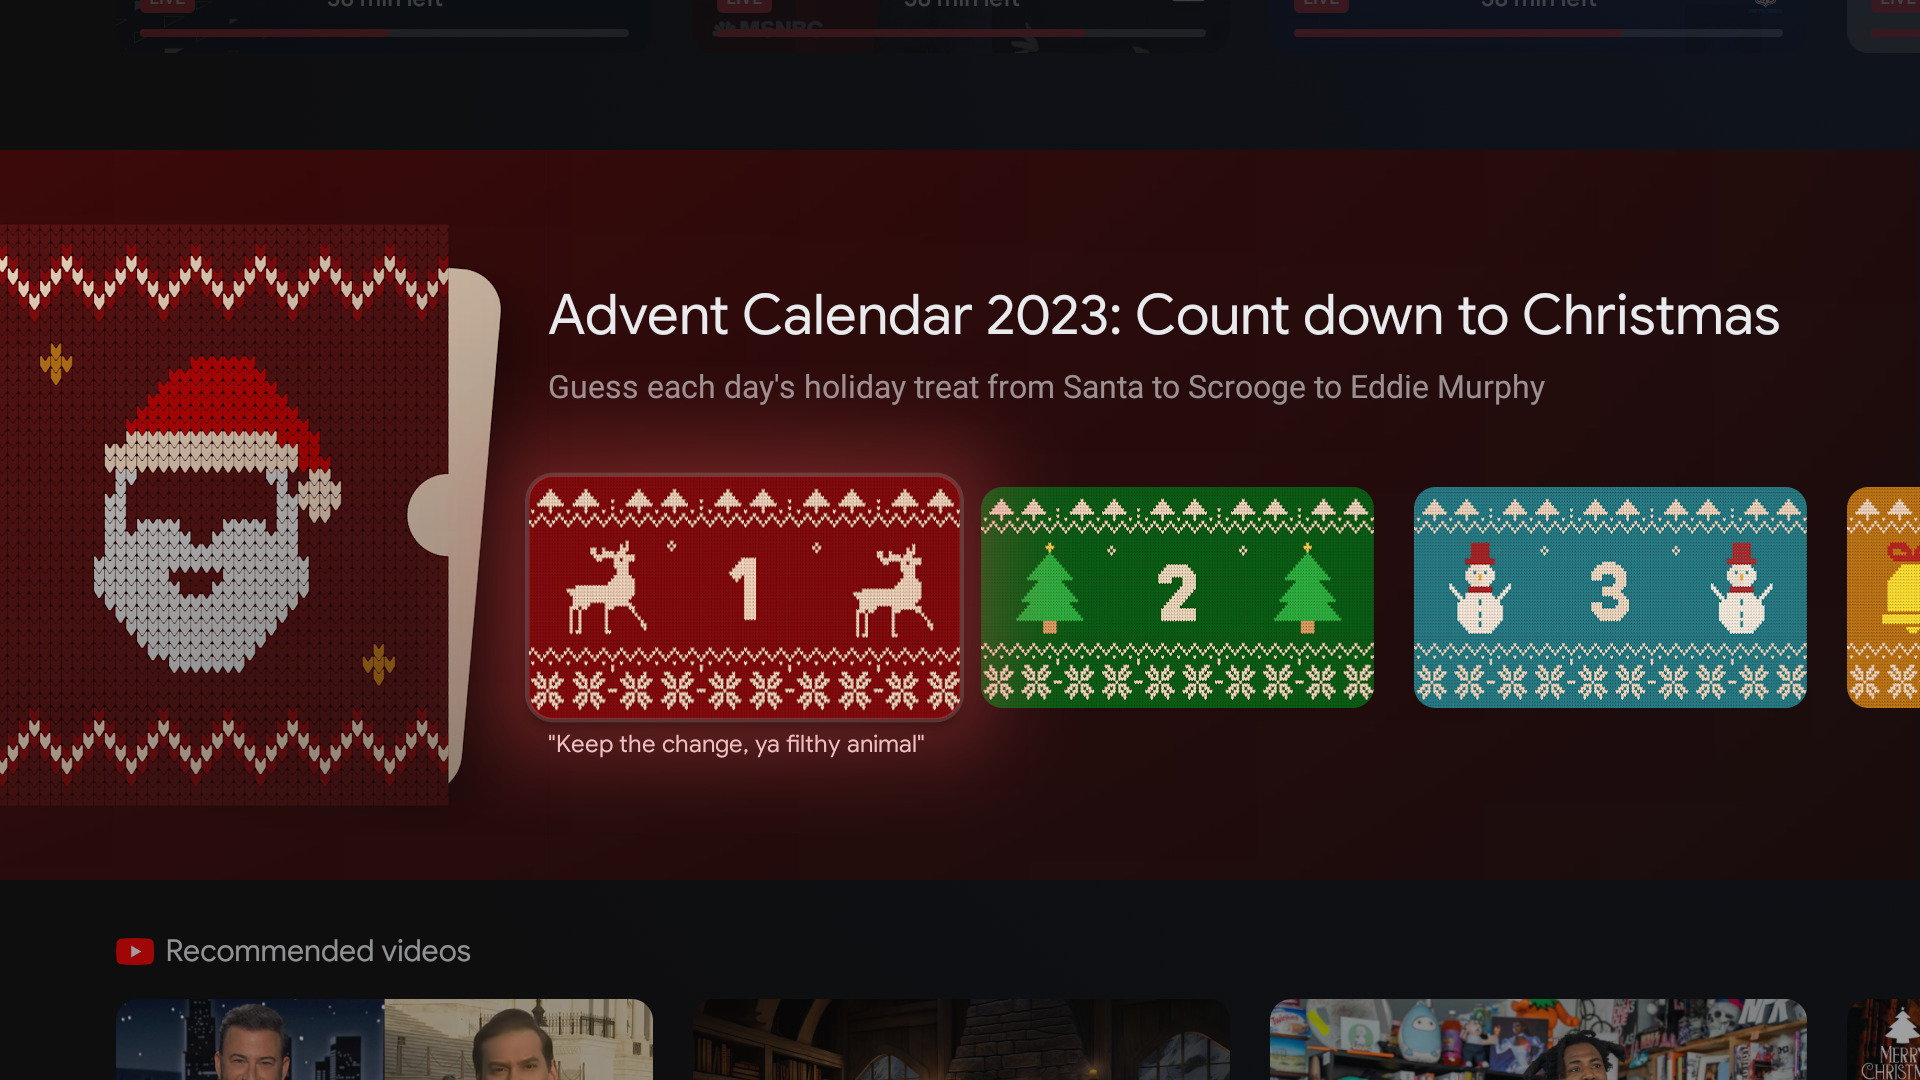 Google TV's advent calendar